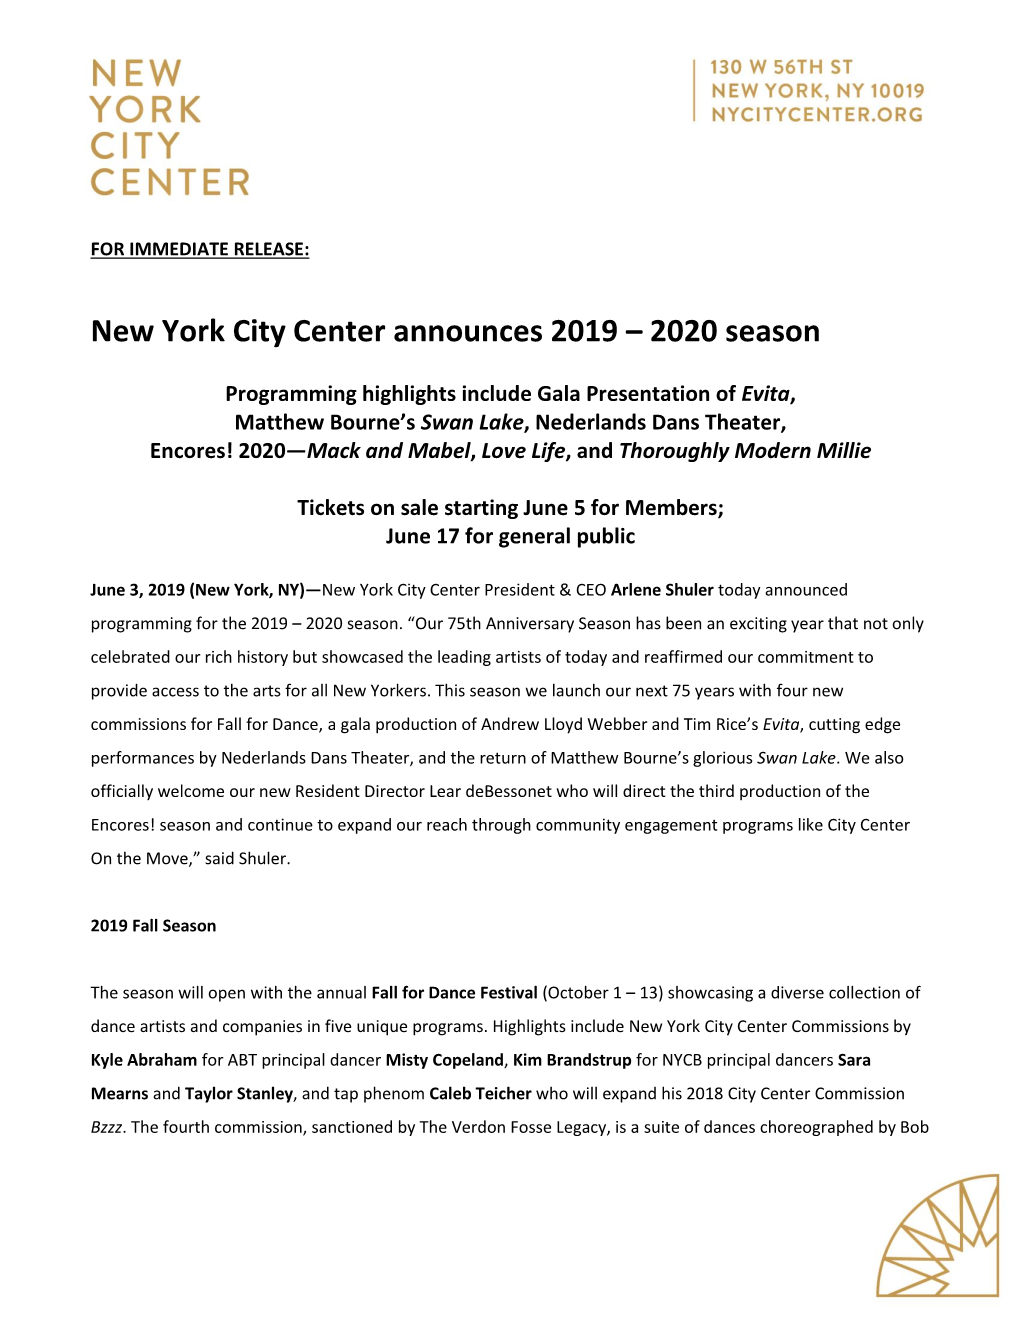 New York City Center Announces 2019 – 2020 Season